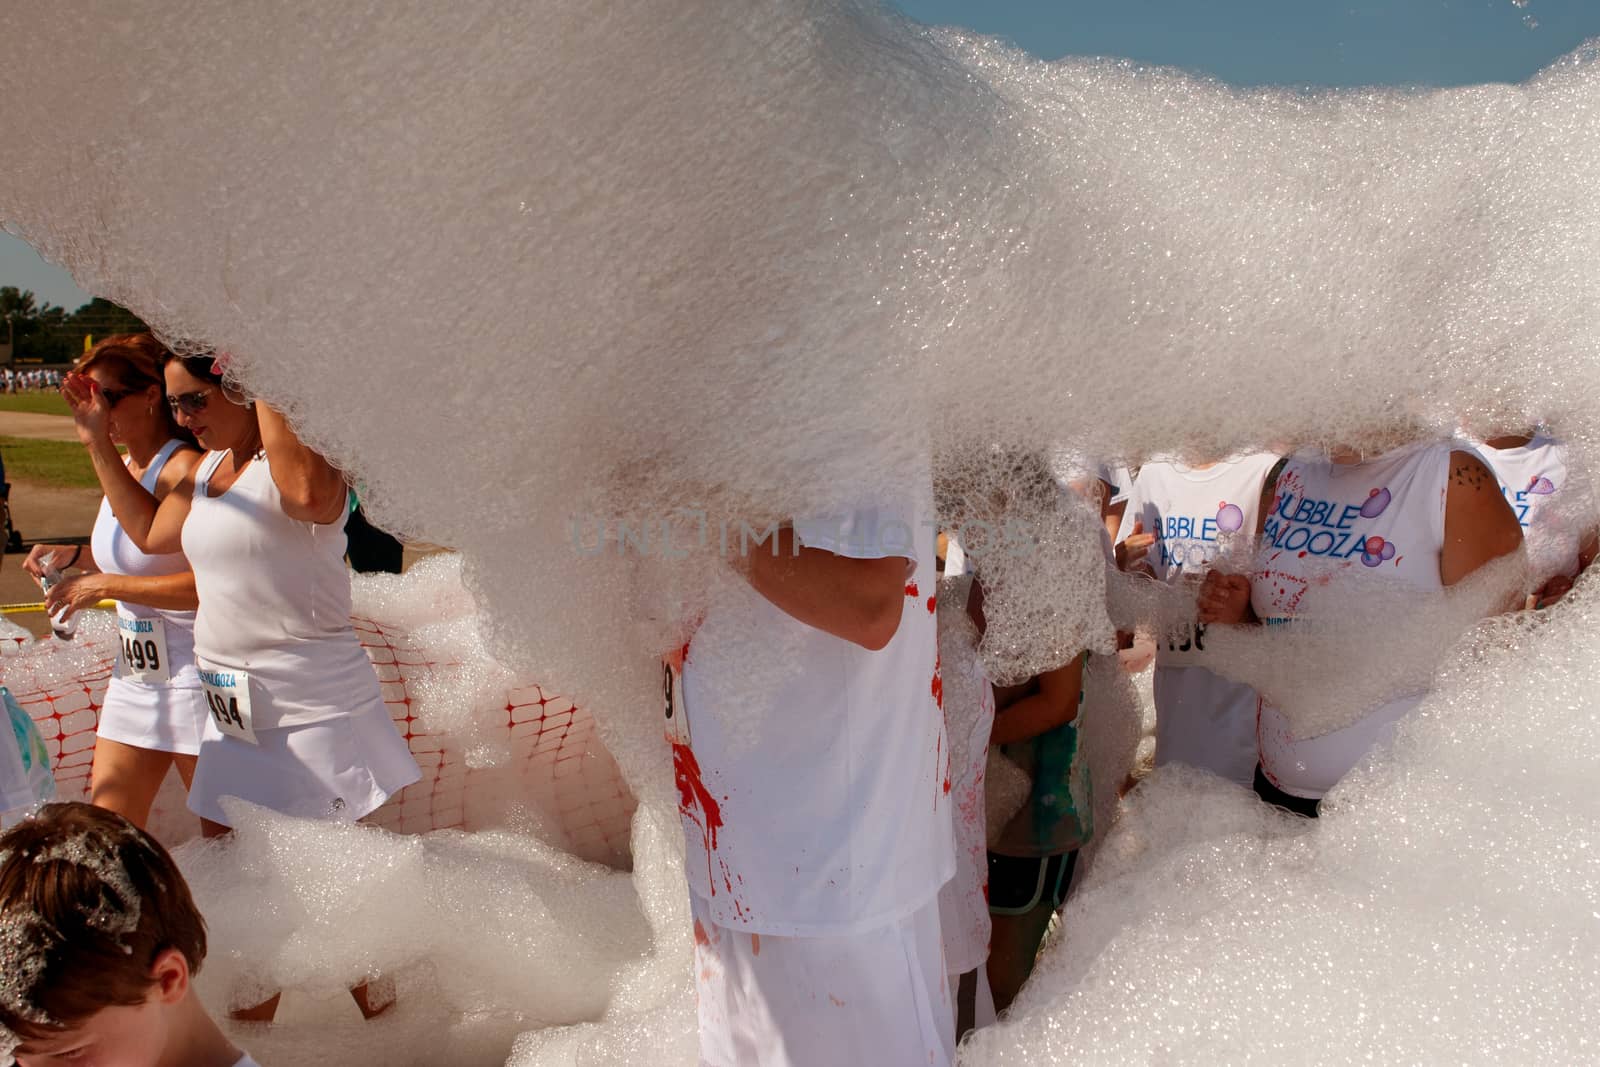 People Walk Through Cloud Of Foam At Bubble Palooza Event by BluIz60